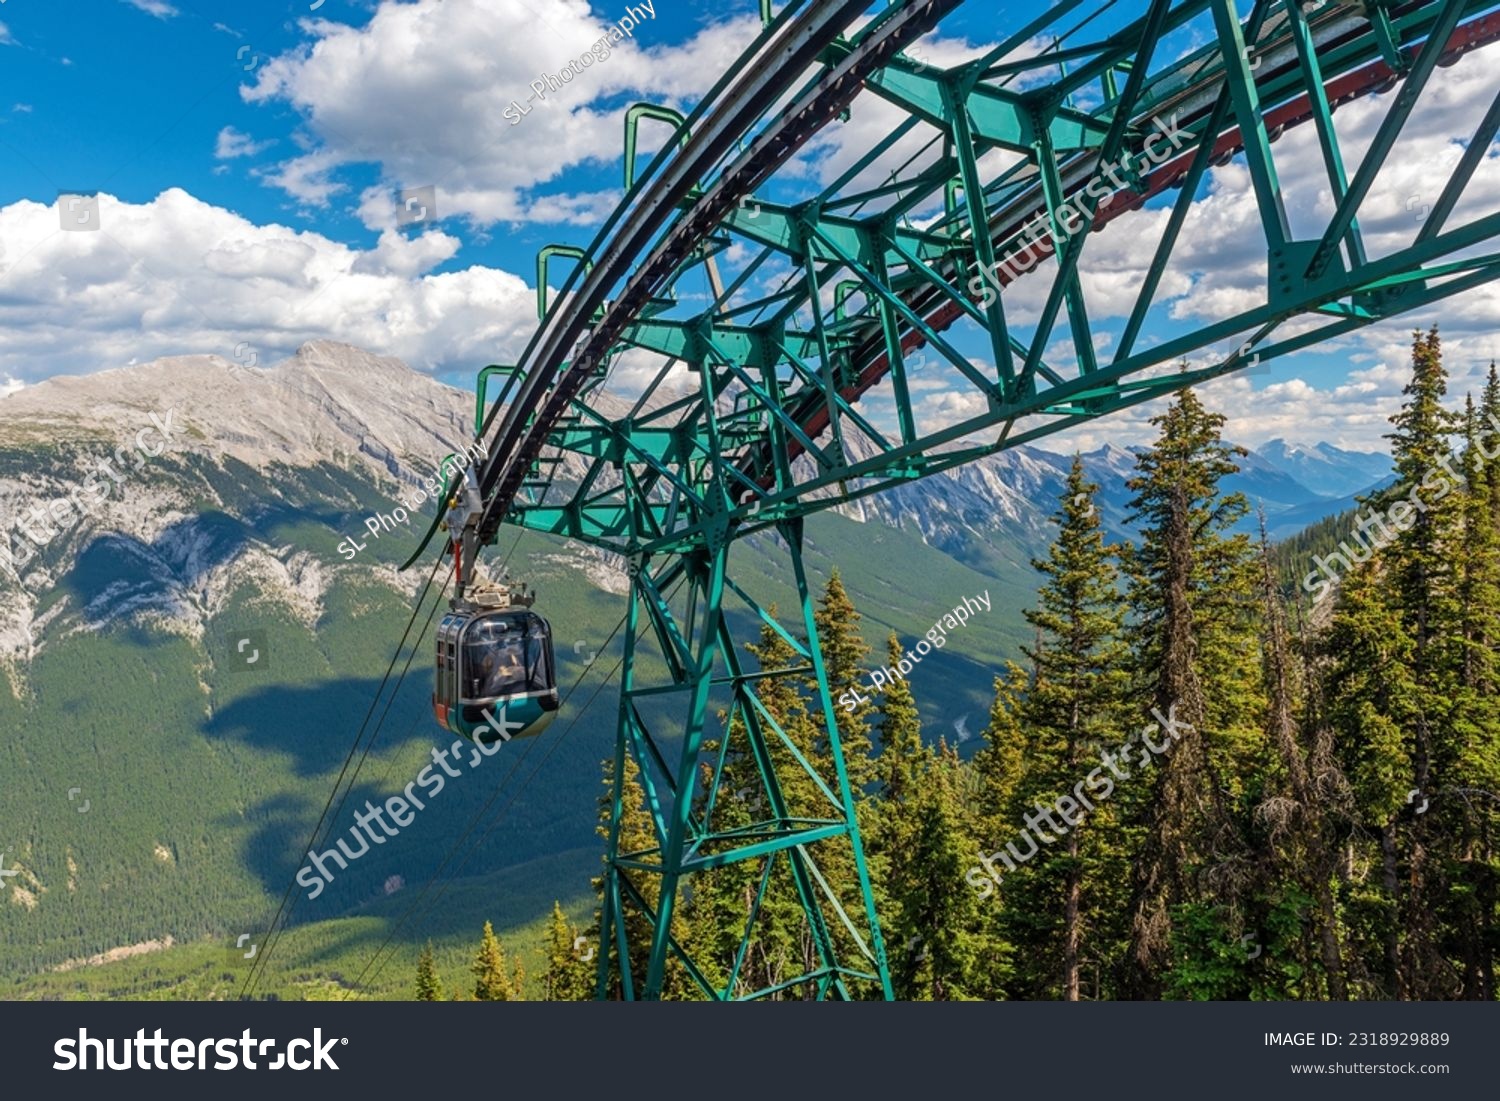 Banff Gondola cable car arrival station, Banff national park, Canada. #2318929889